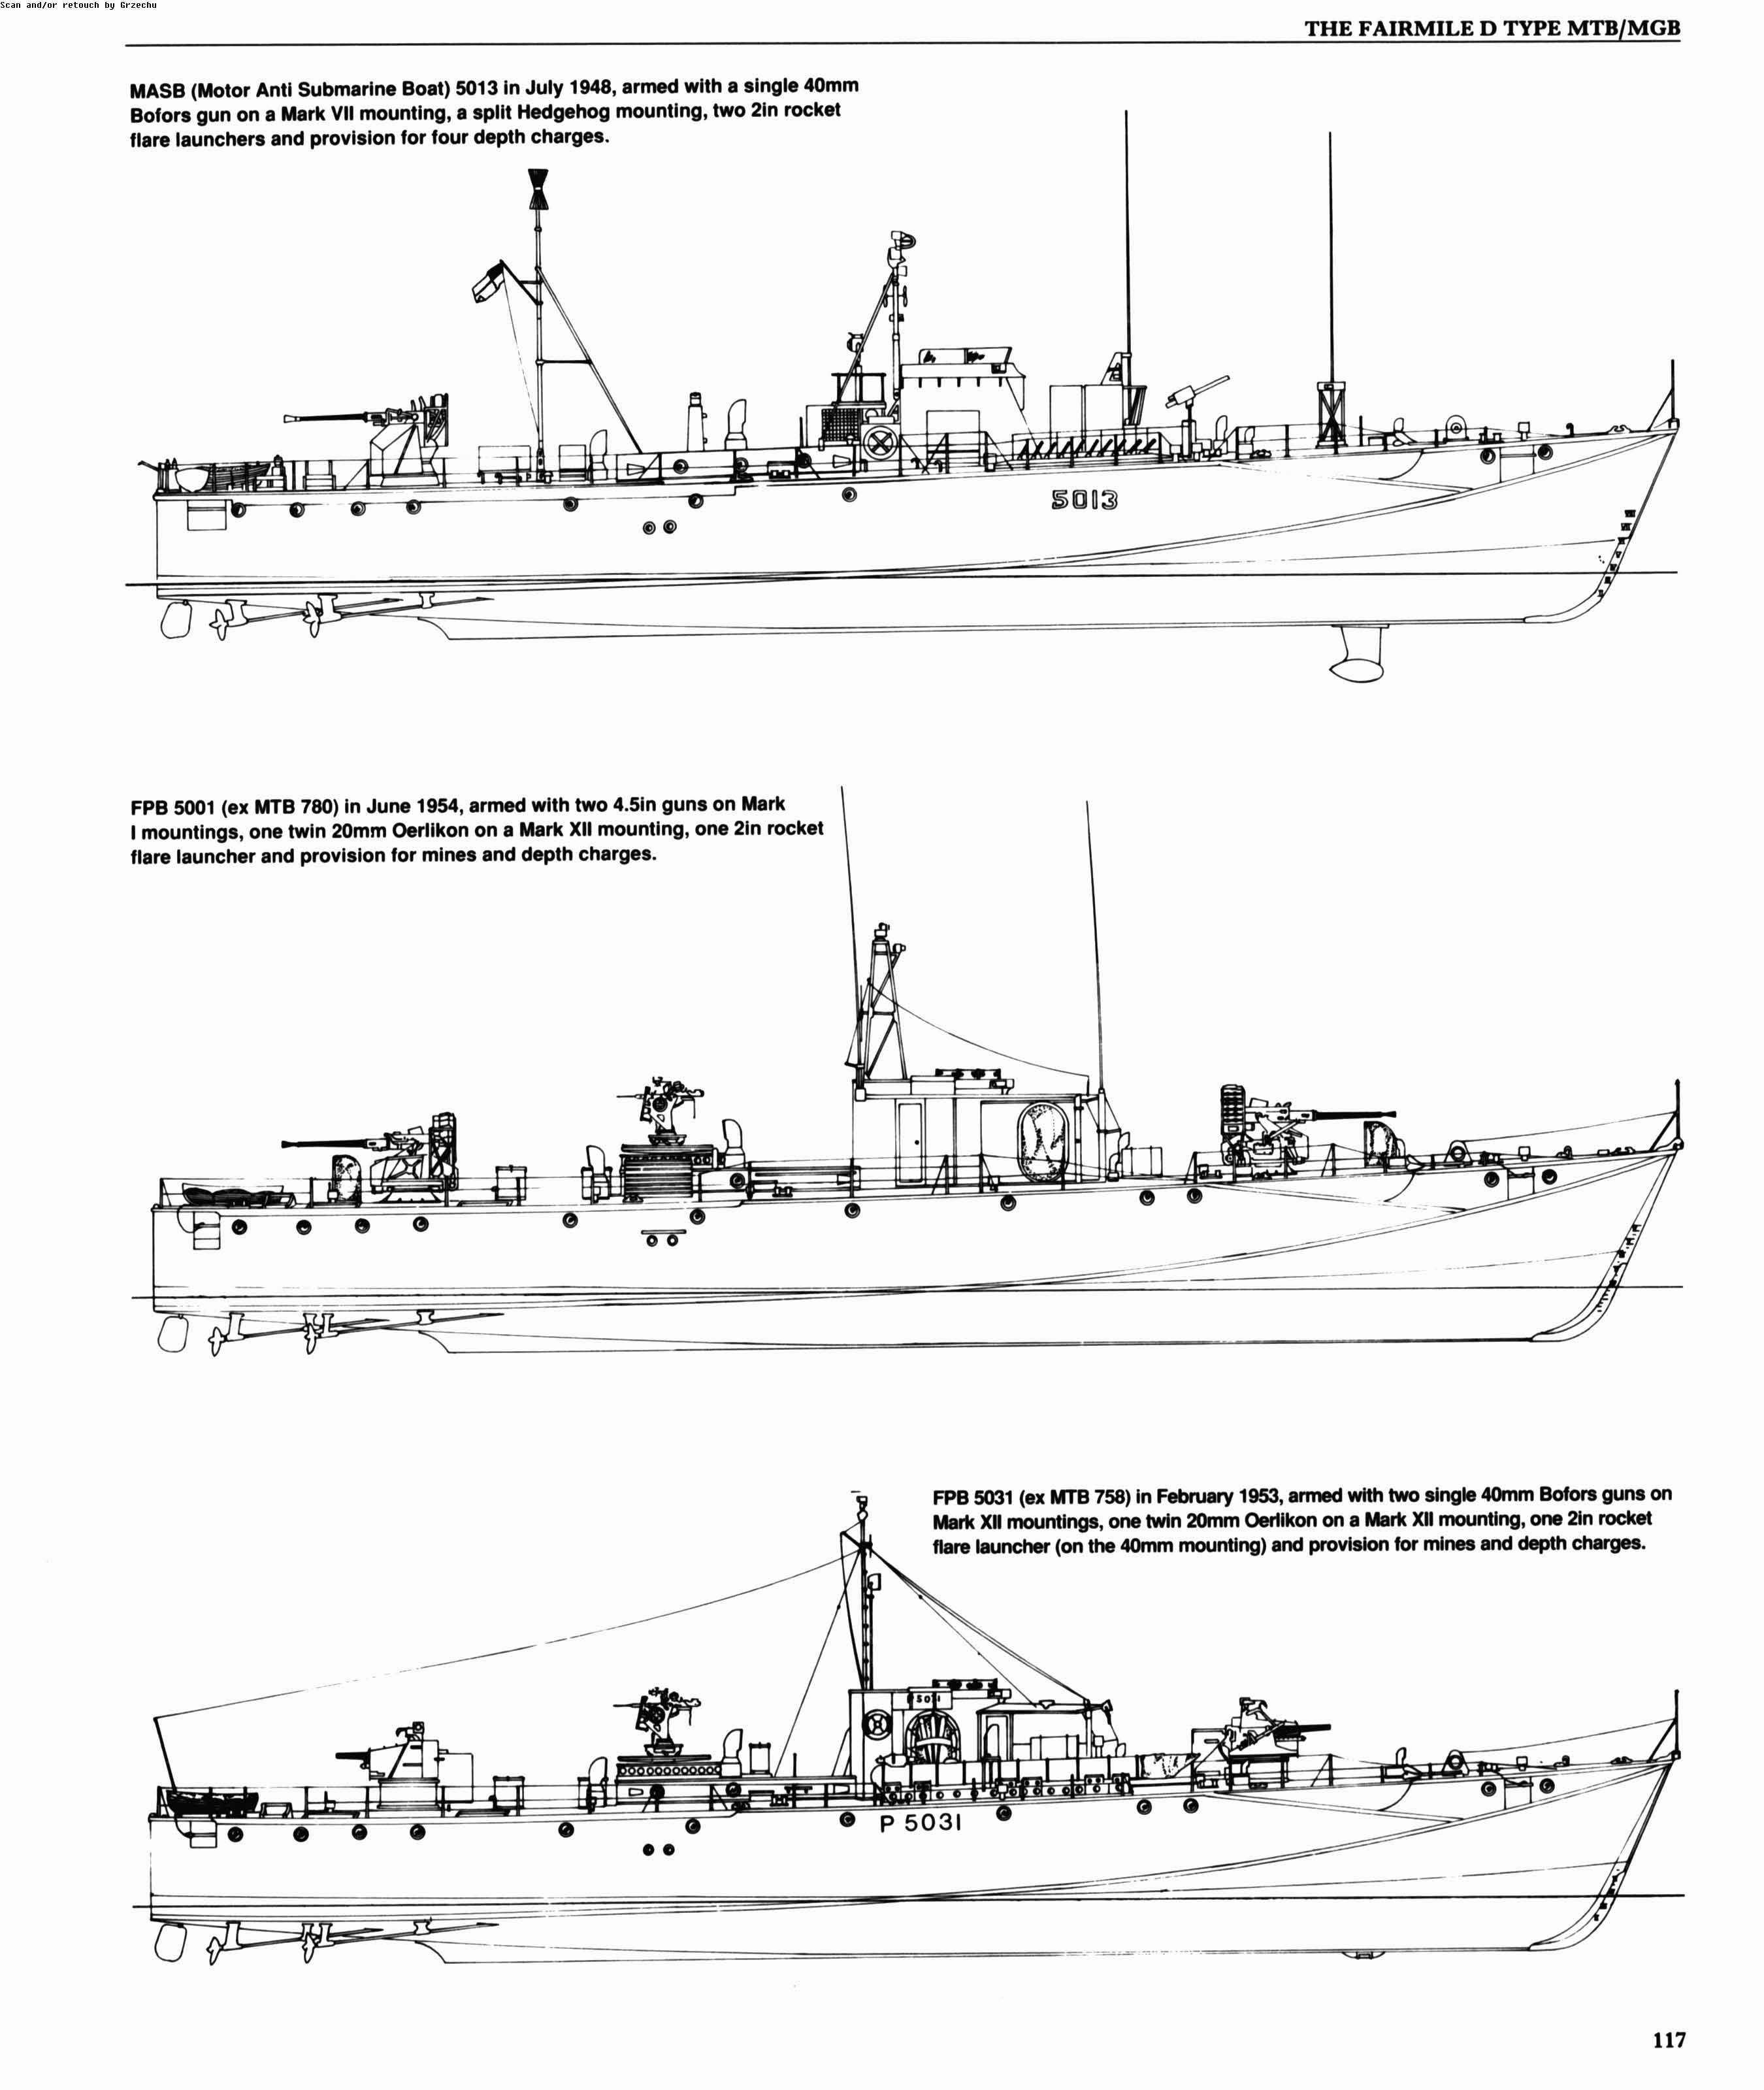 Allied Coastal Forces of World War II (1) Fairmile designs & U.S. submarine chasers_Page_119.jpg